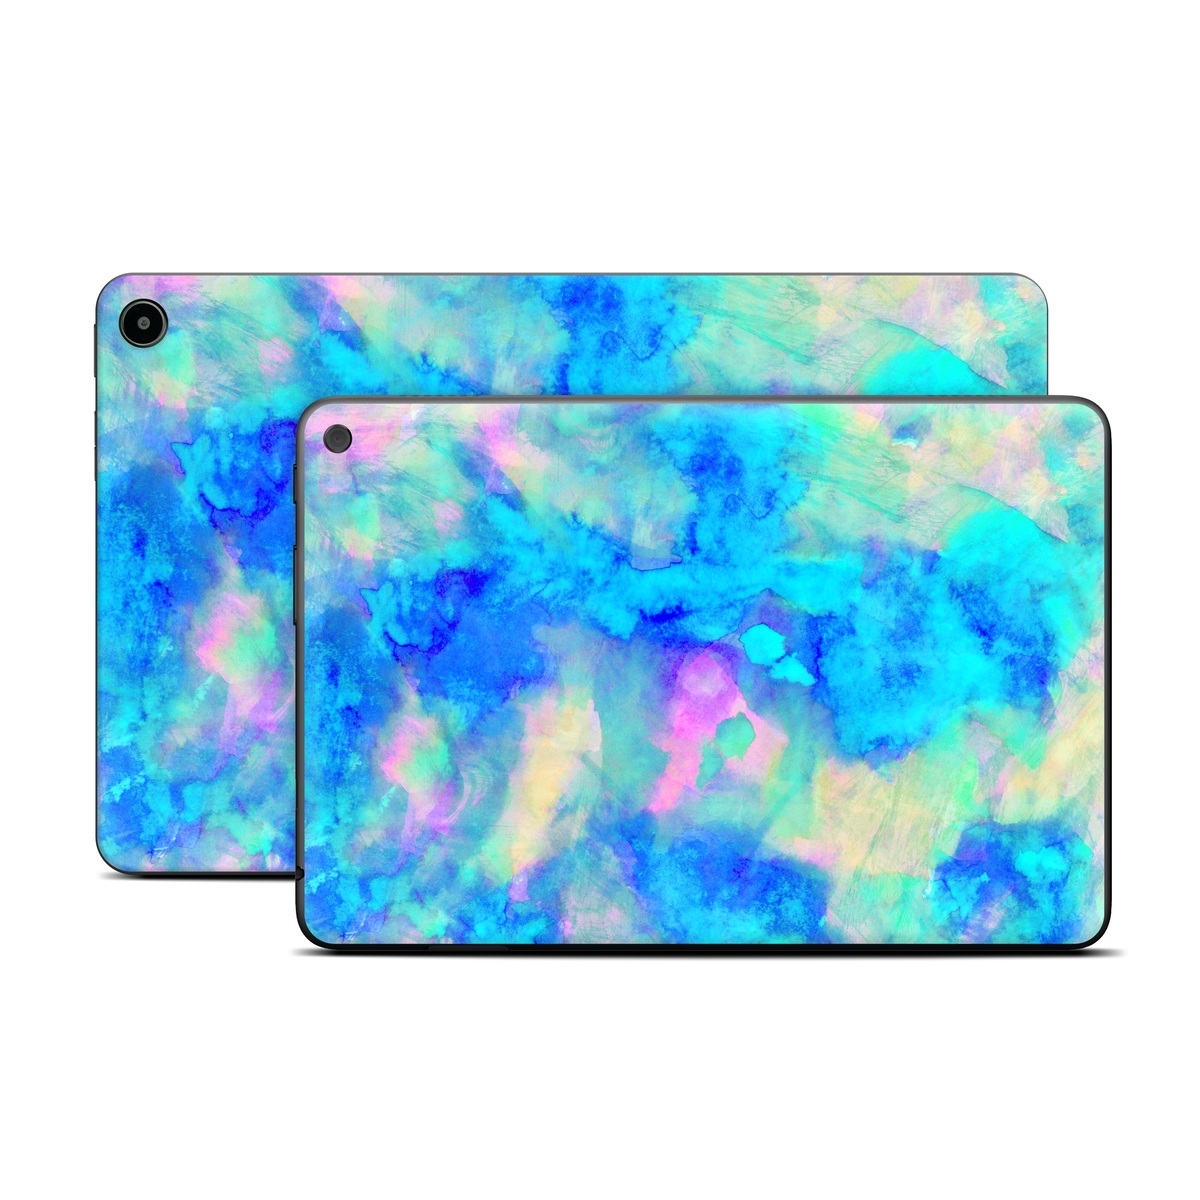 Amazon Fire Tablet Series Skin Skin design of Blue, Turquoise, Aqua, Pattern, Dye, Design, Sky, Electric blue, Art, Watercolor paint, with blue, purple colors